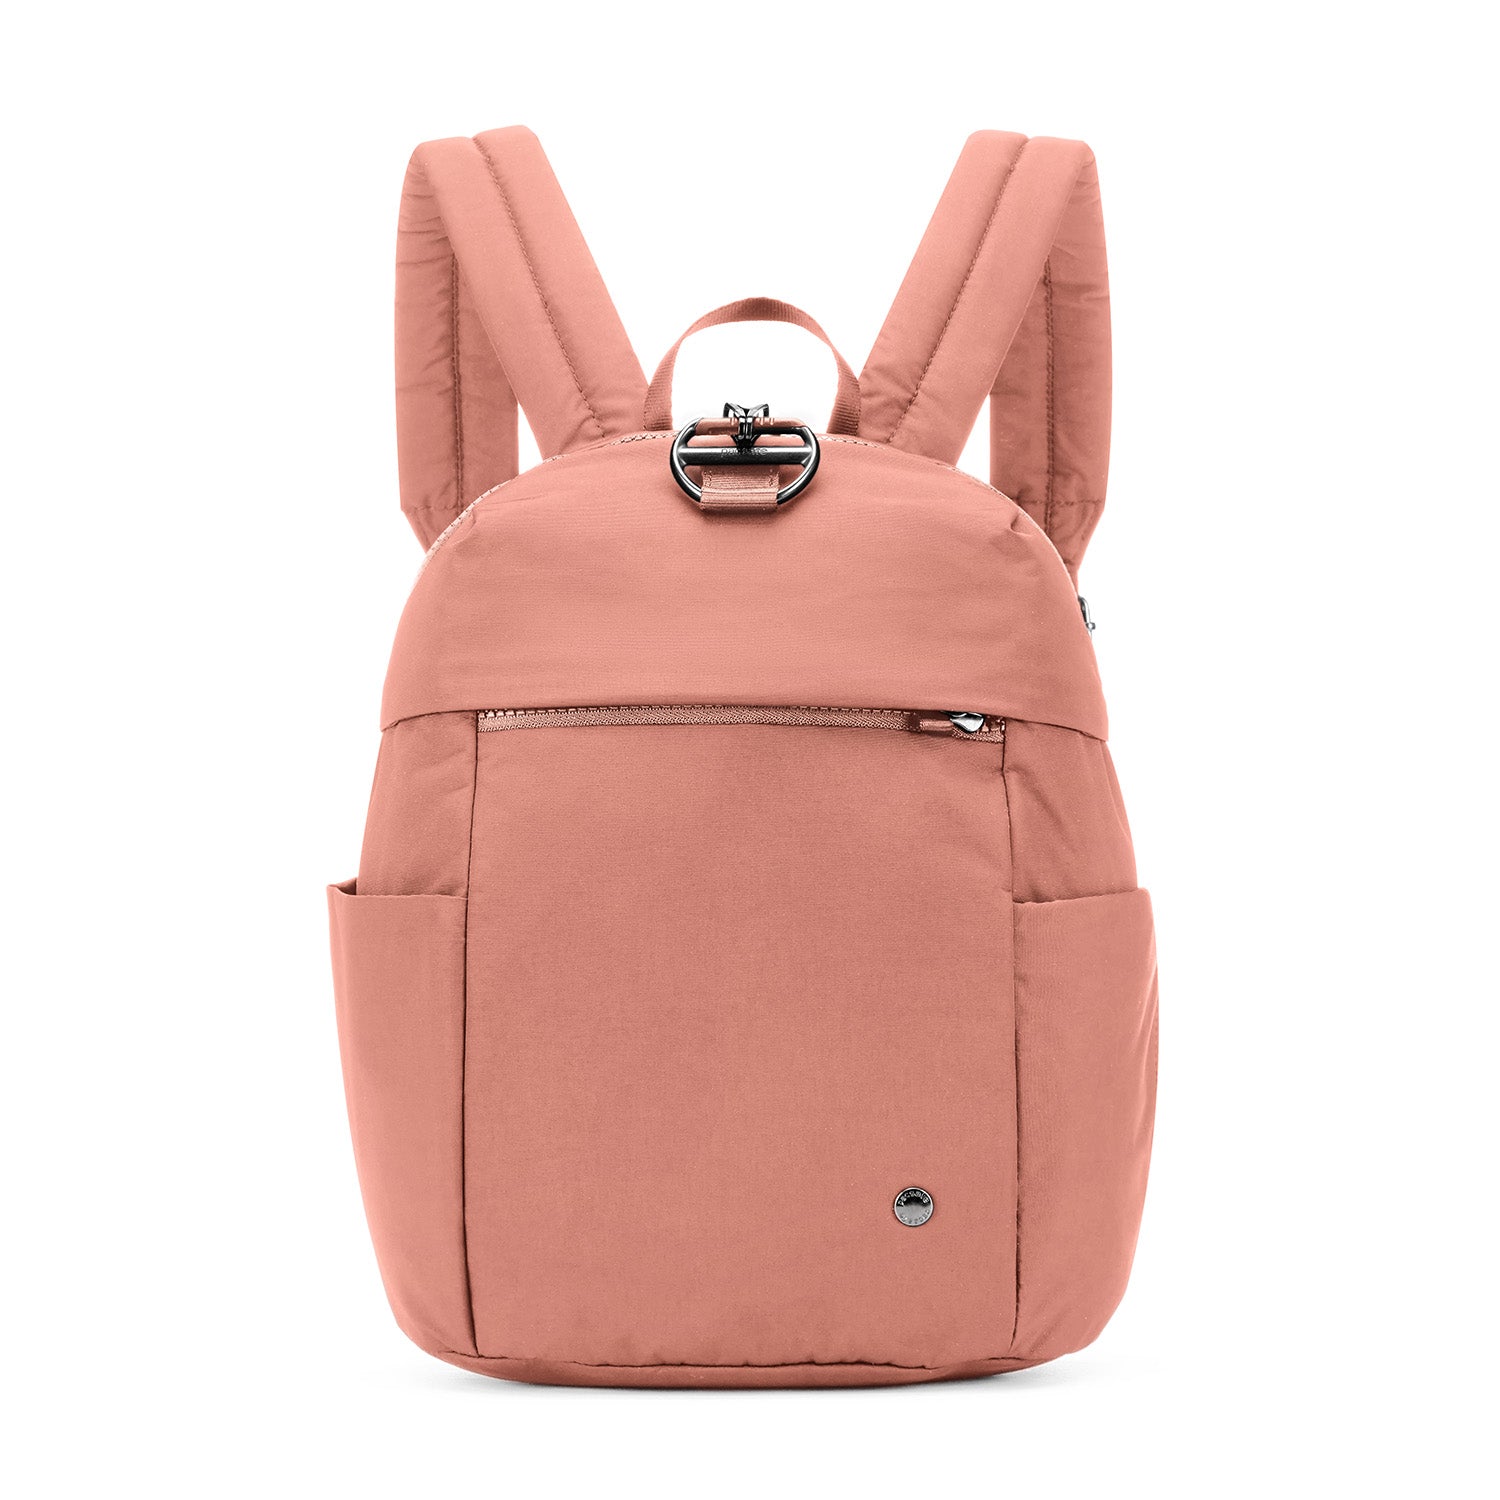 Pacsafe - CX Backpack Petite - Rose